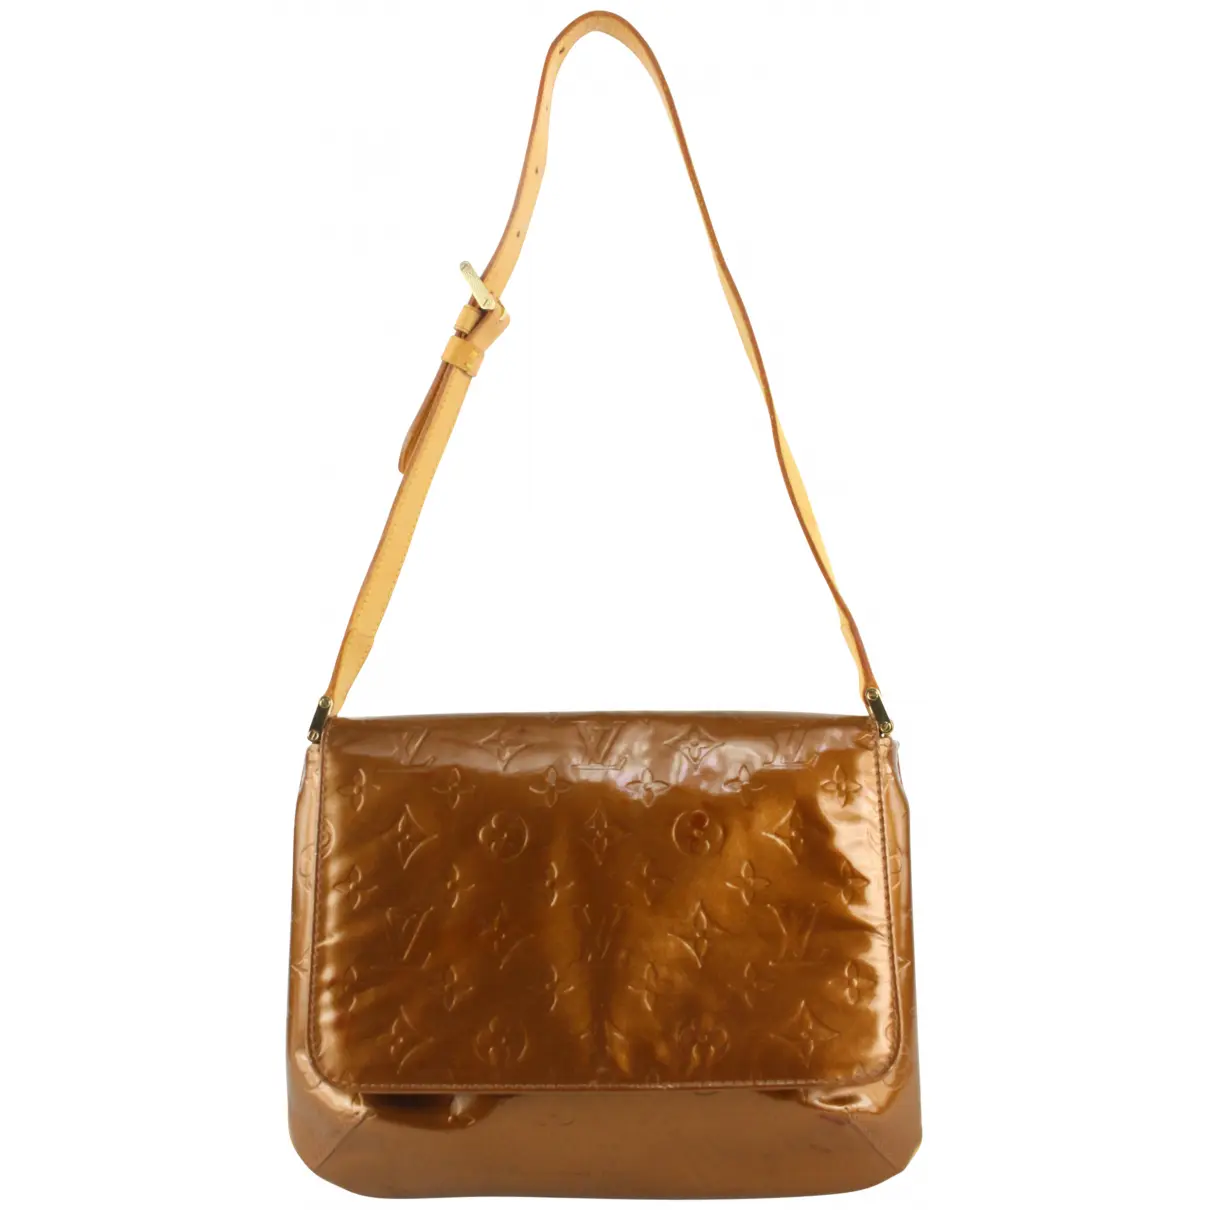 Thompson leather handbag Louis Vuitton